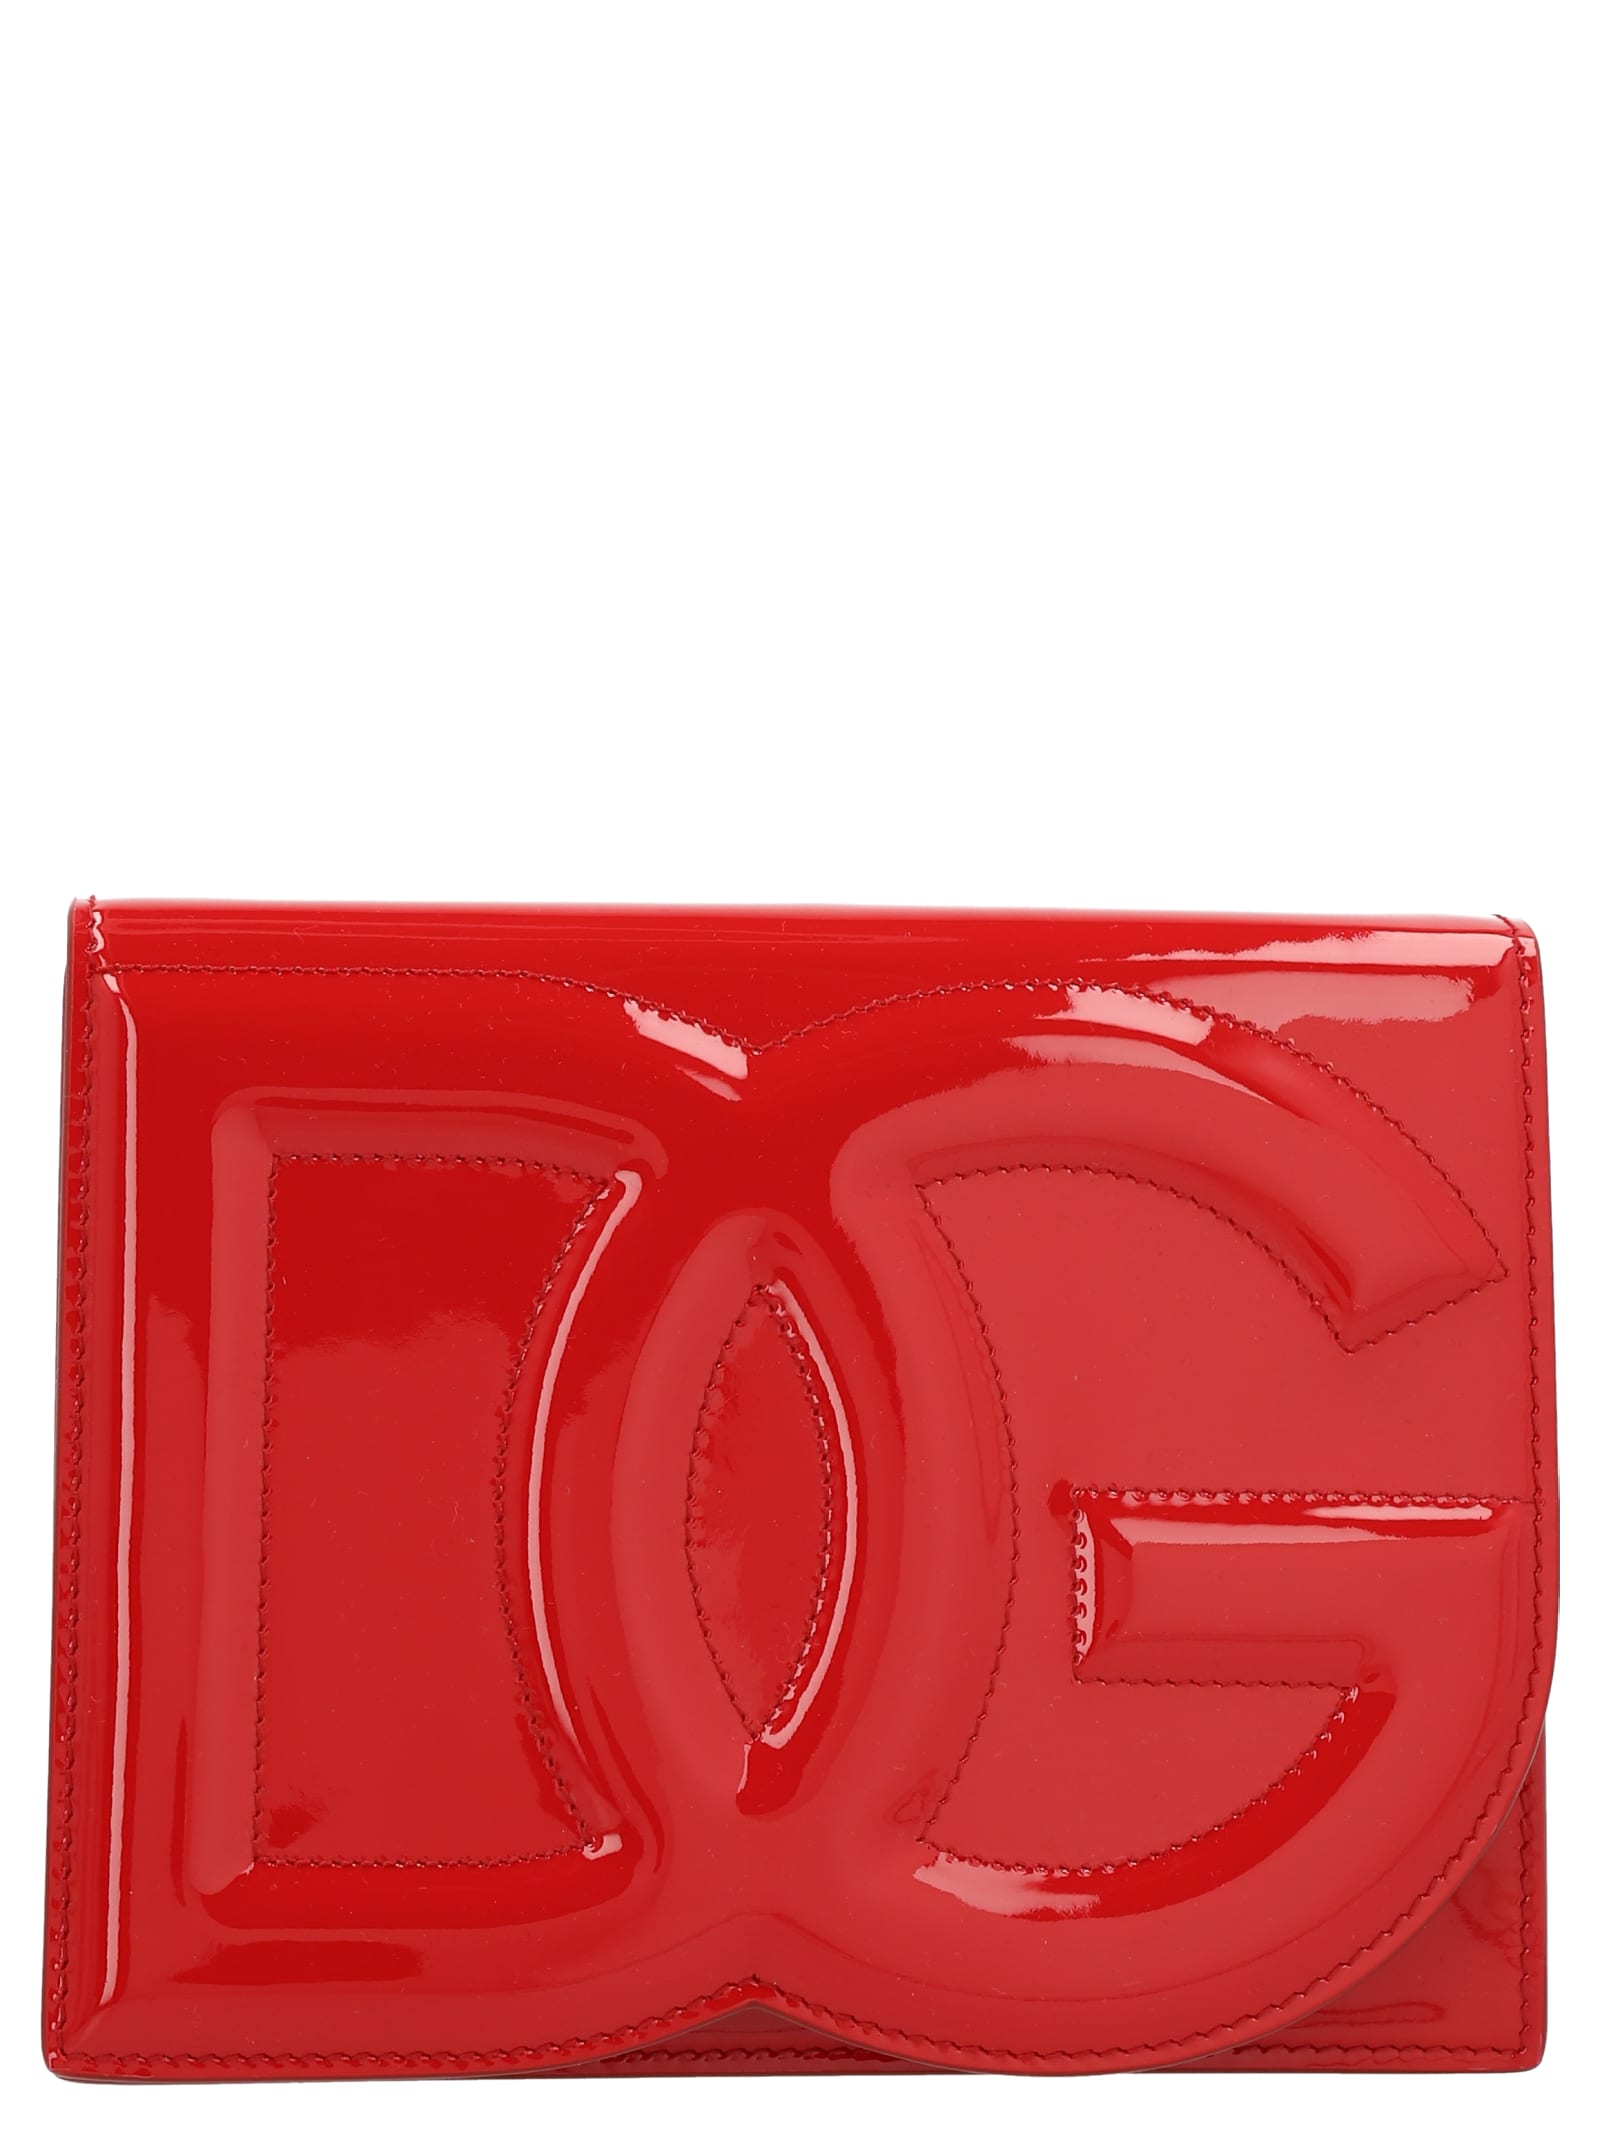 Dolce & Gabbana Patent Logo Crossbody Bag